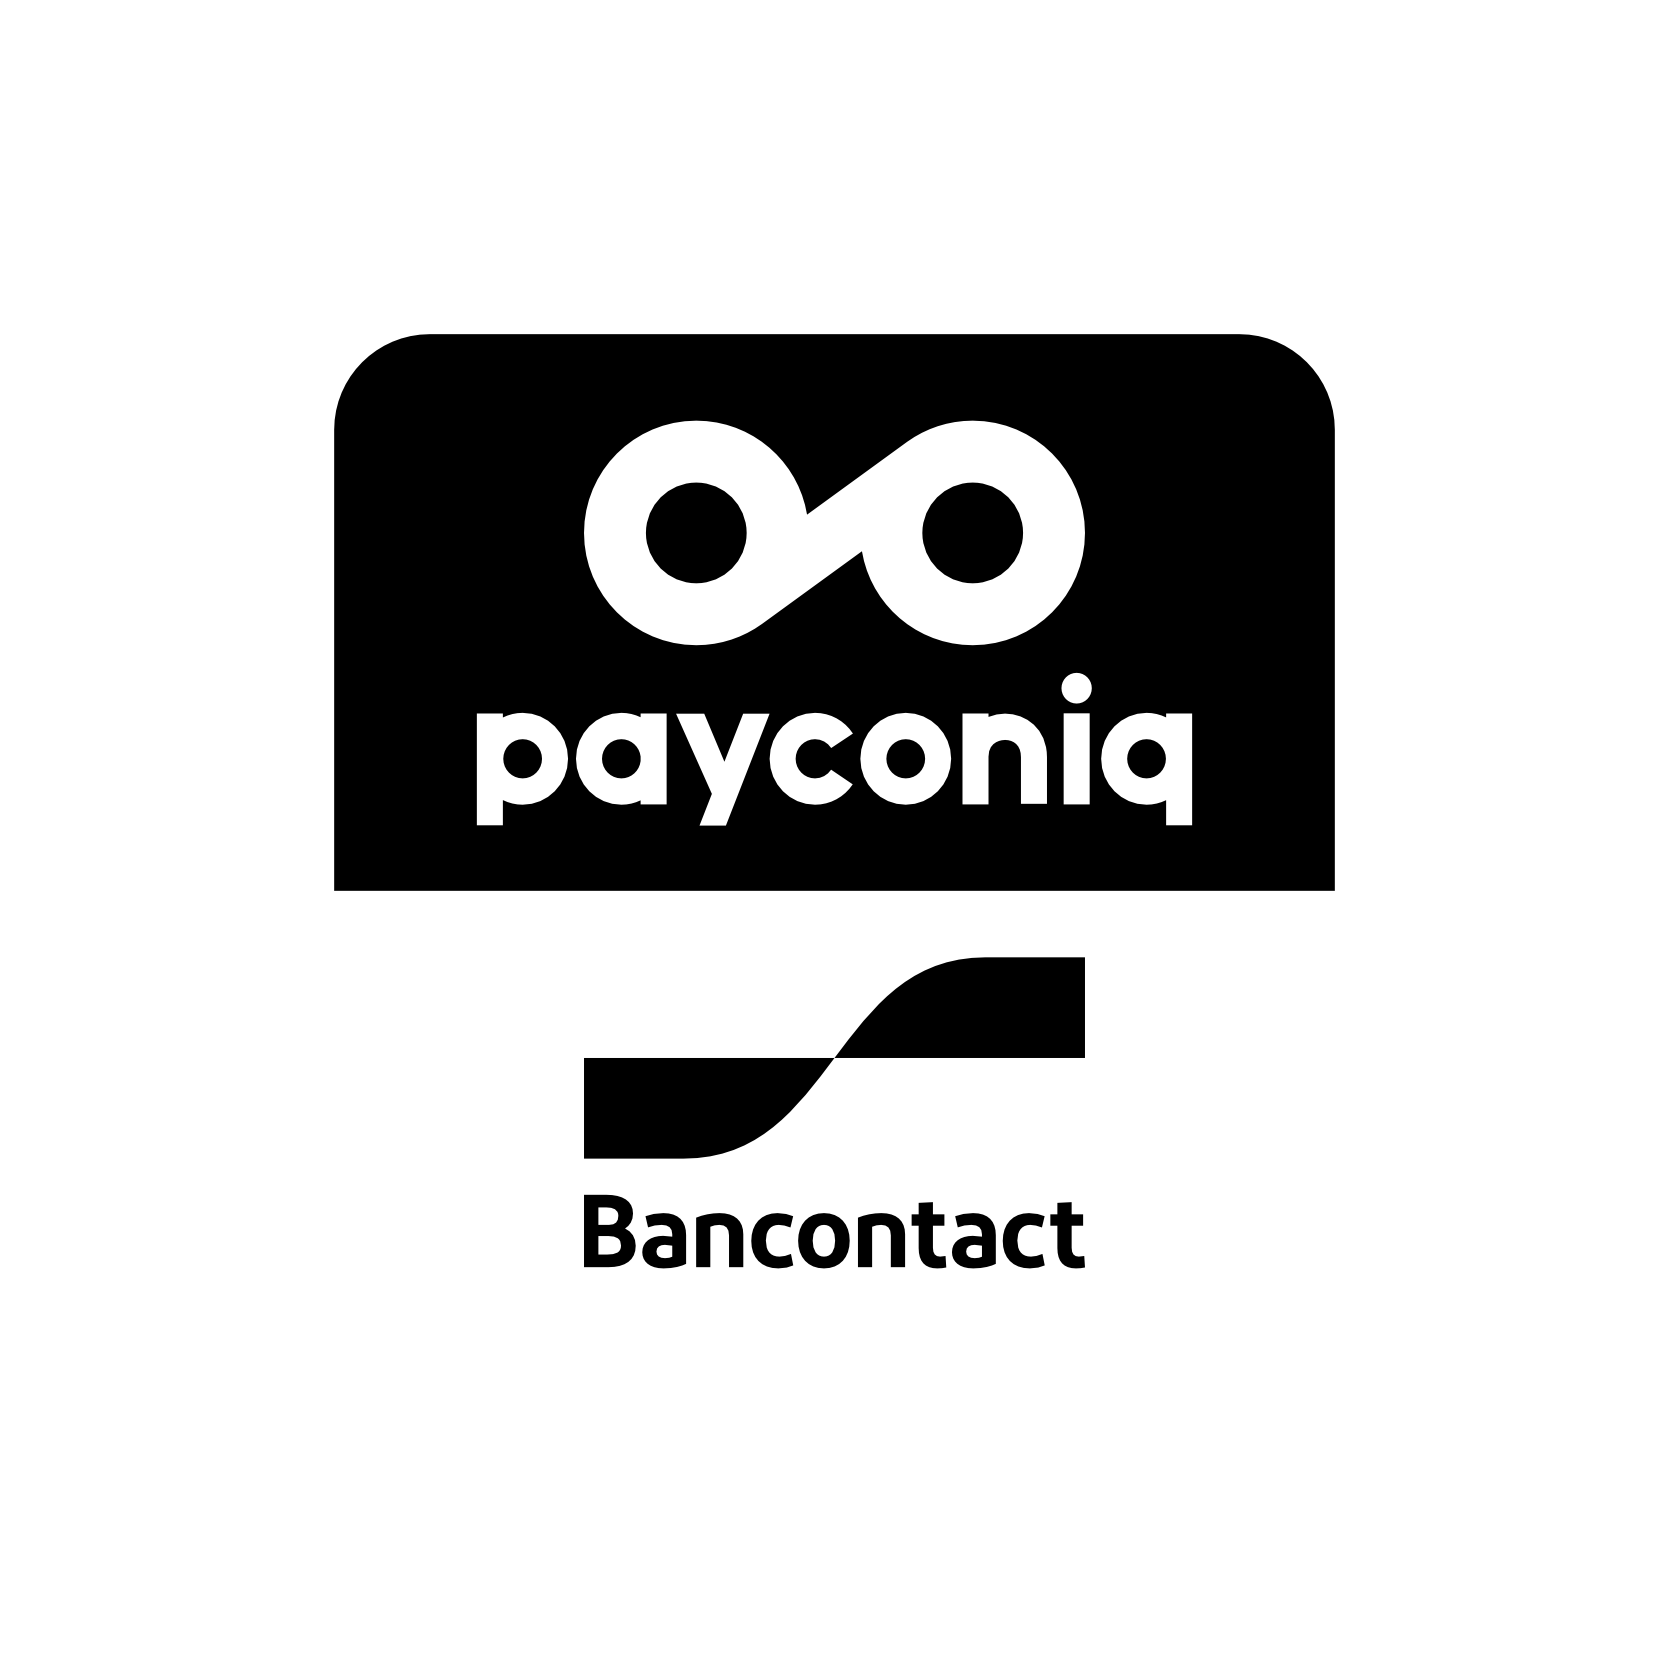 Logo payconiq by Bancontact